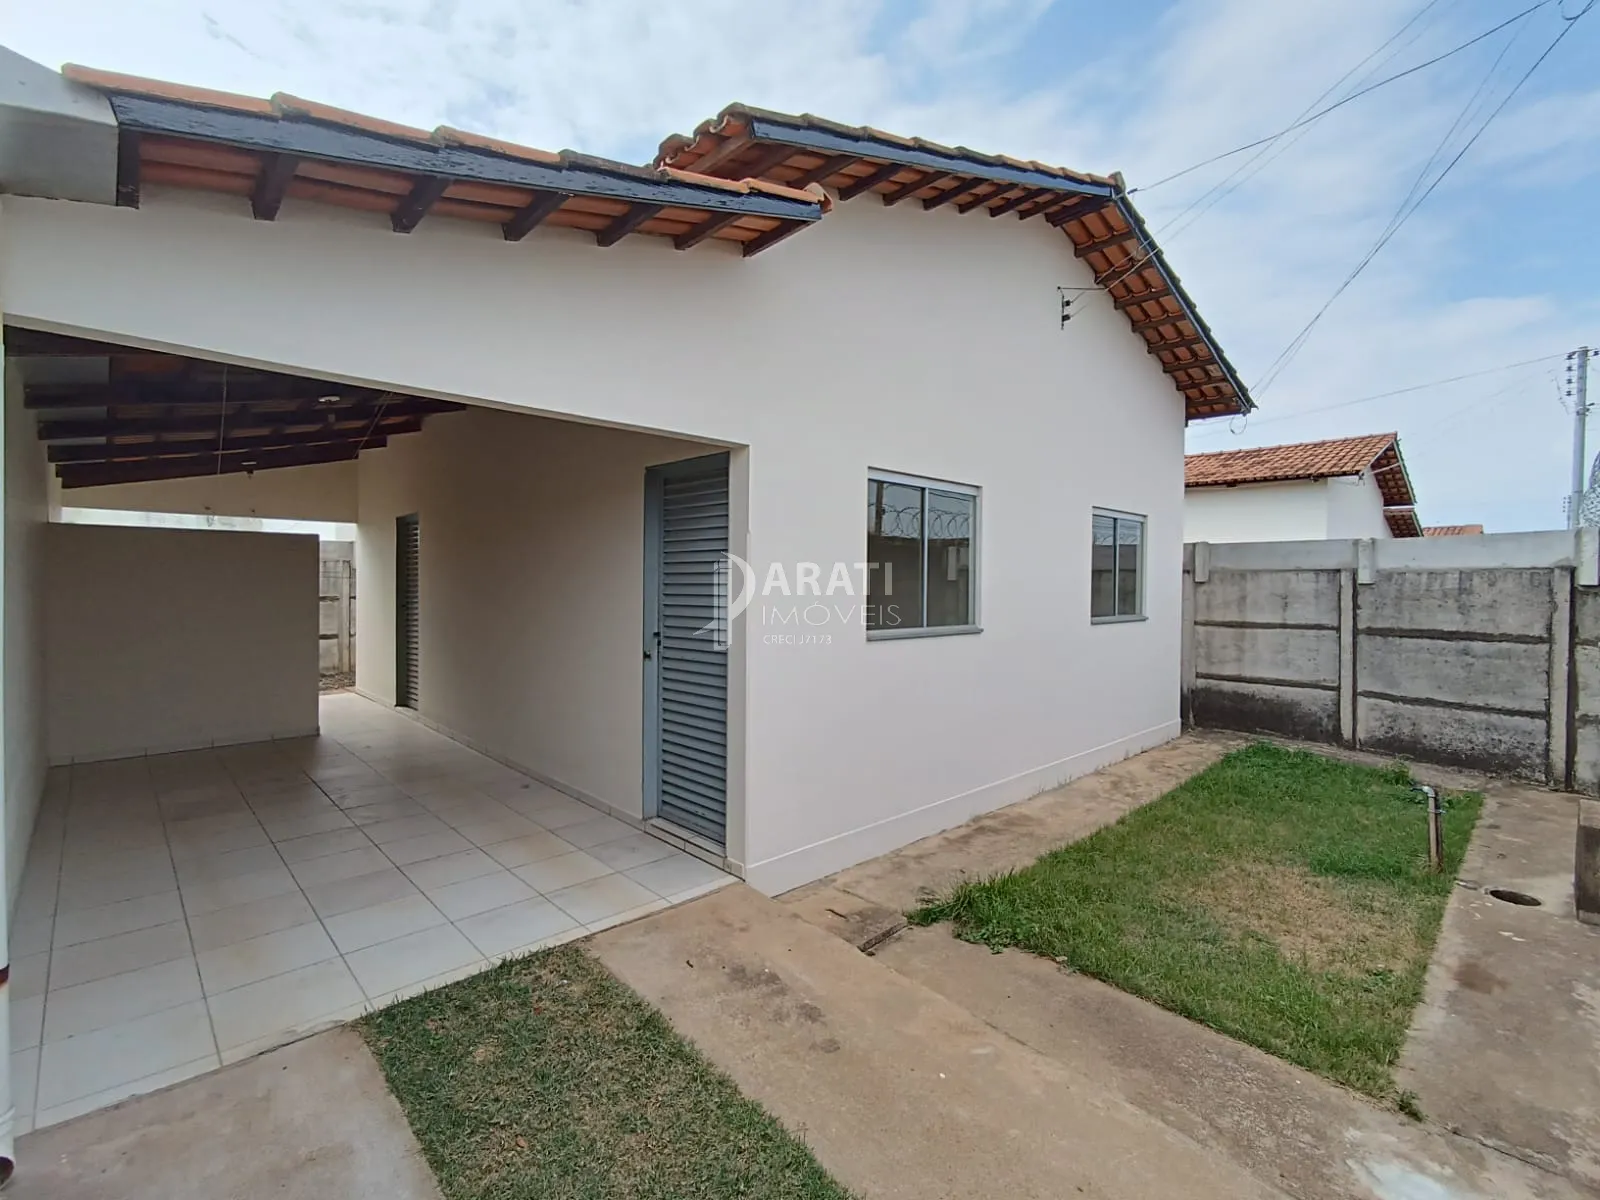 Casa para alugar no bairro Ipanema